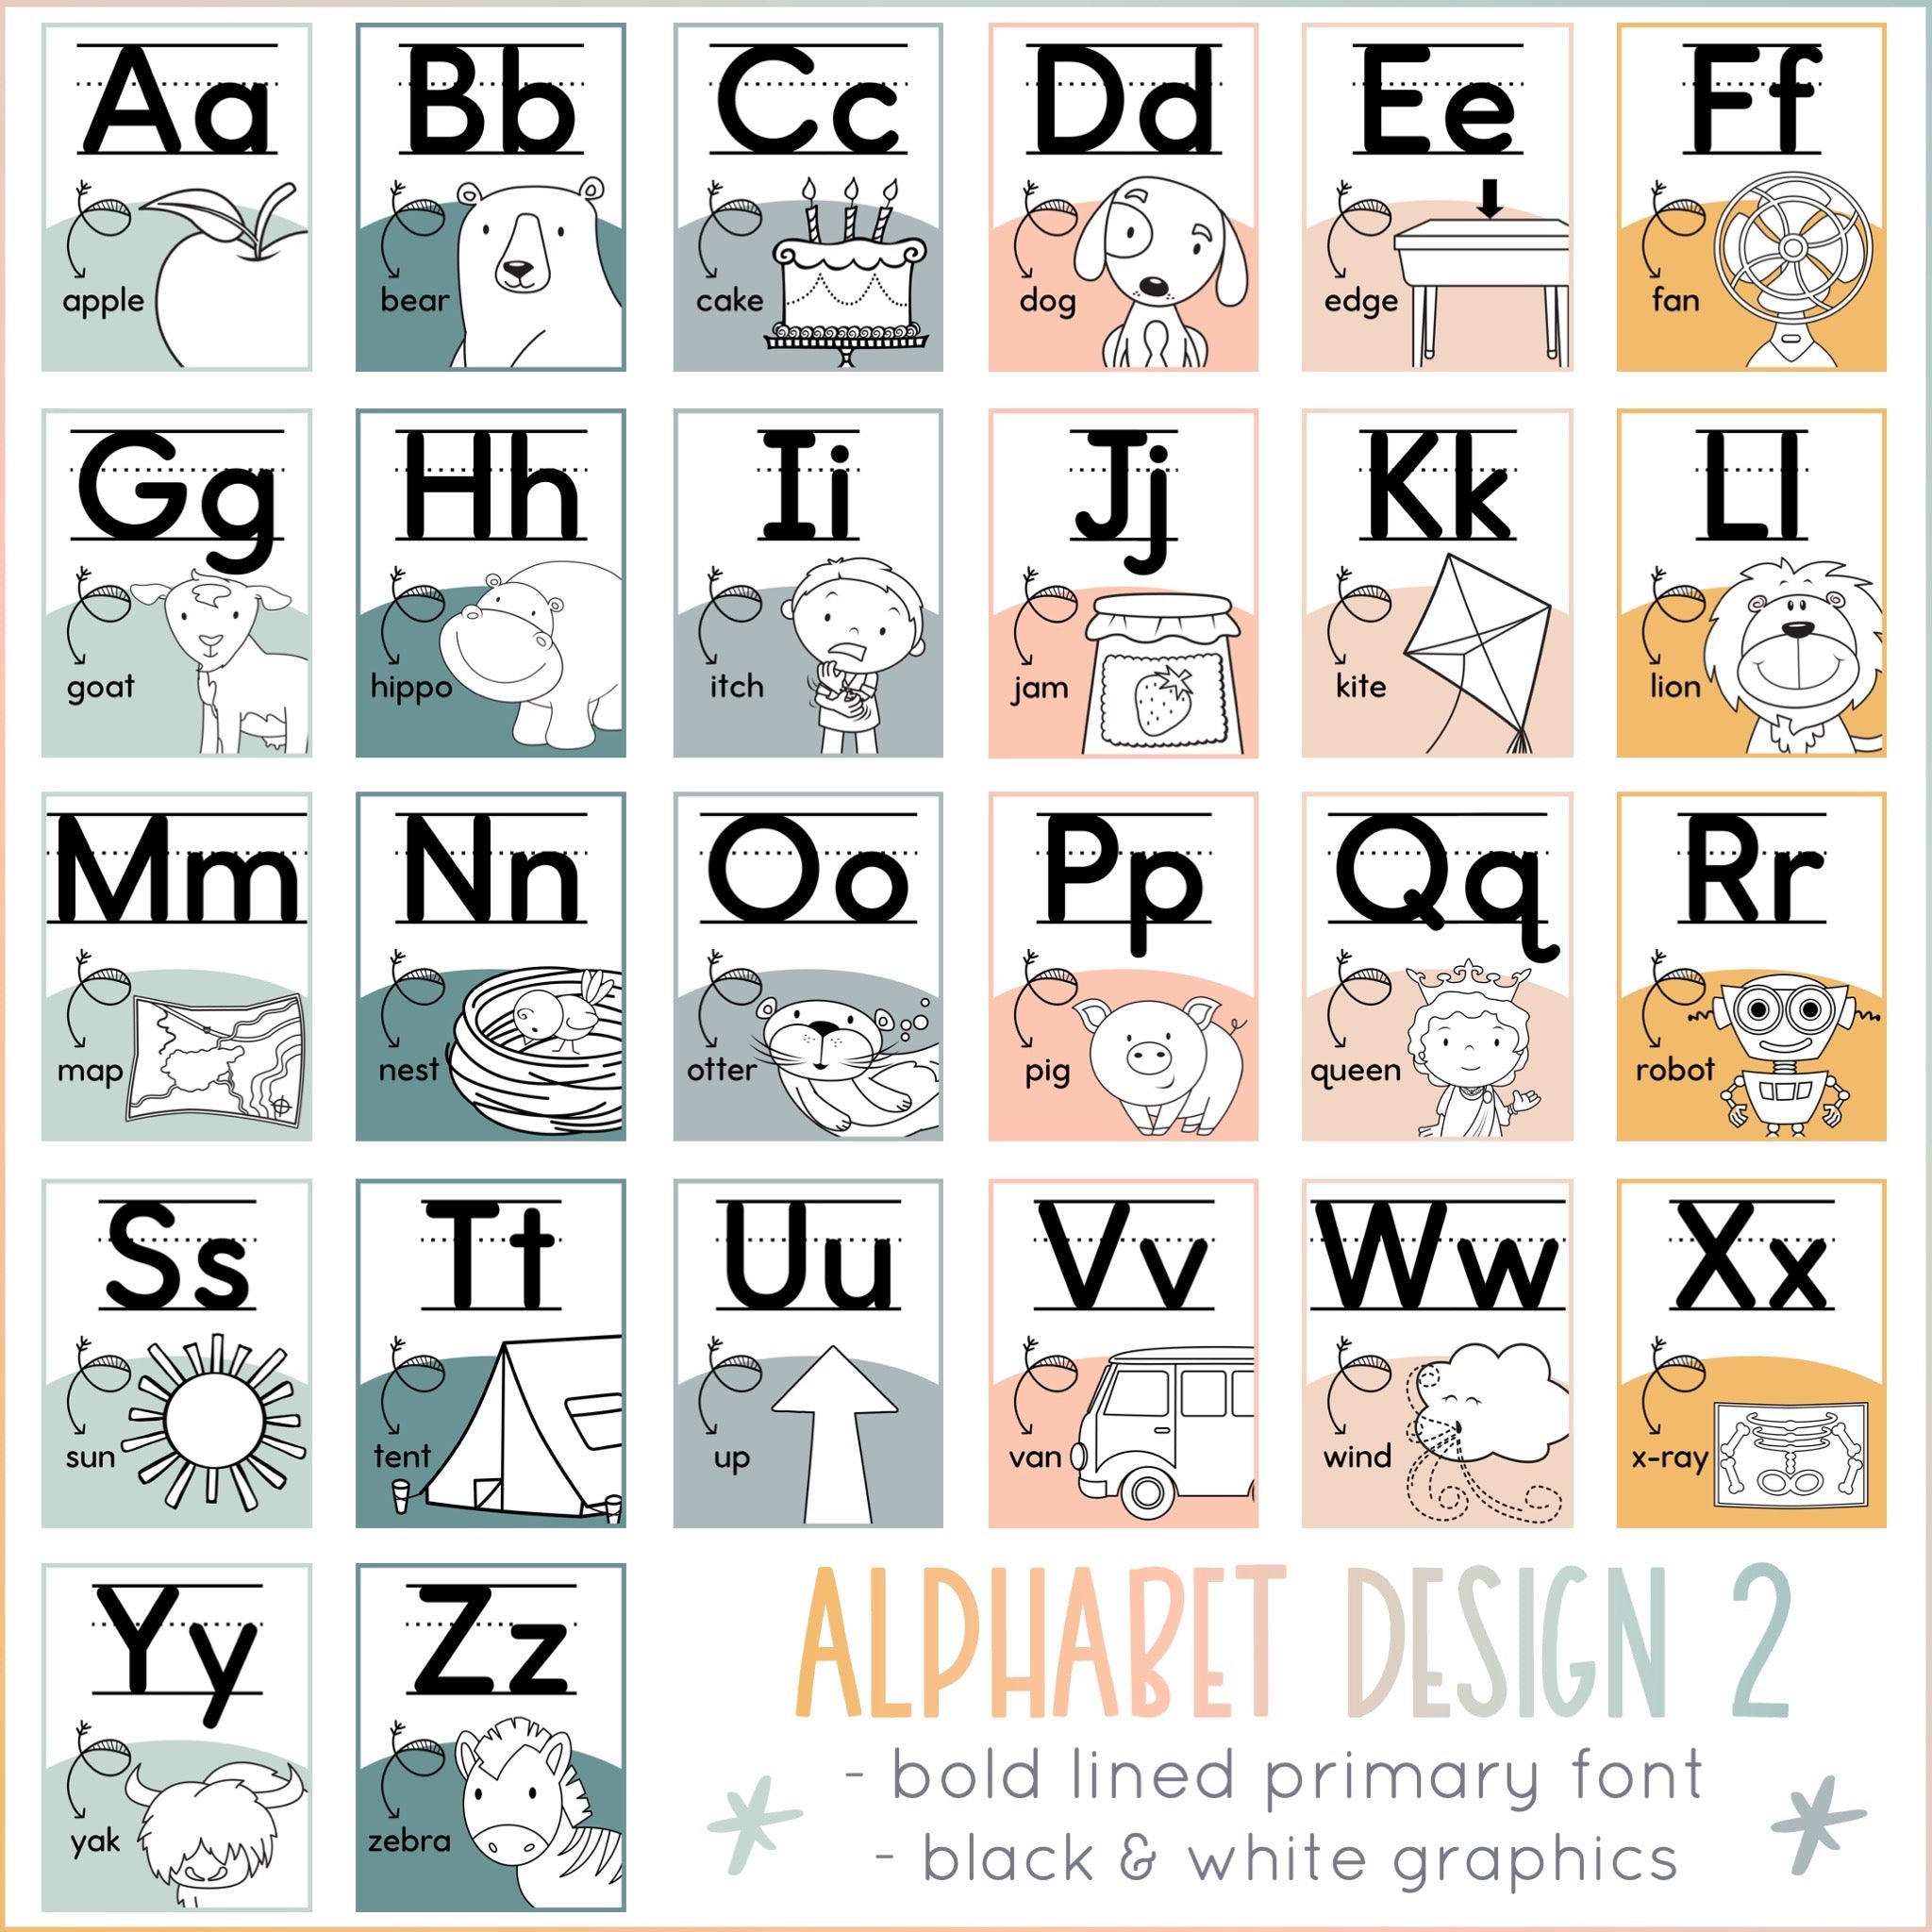 Hello Calm Alphabet Posters